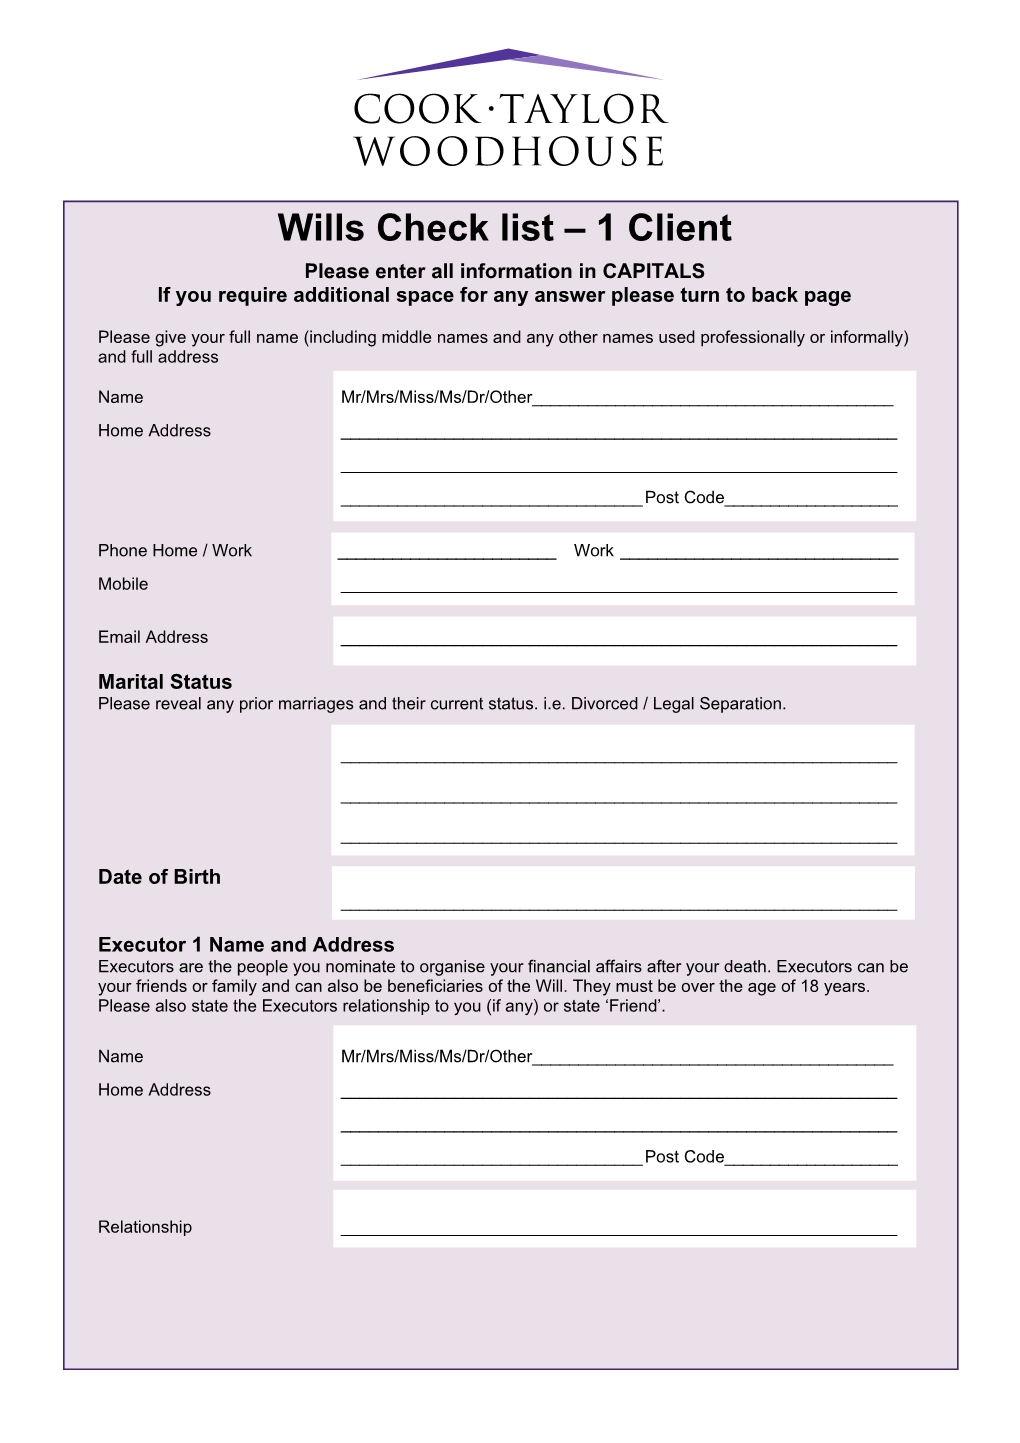 Wills Check List 1 Client